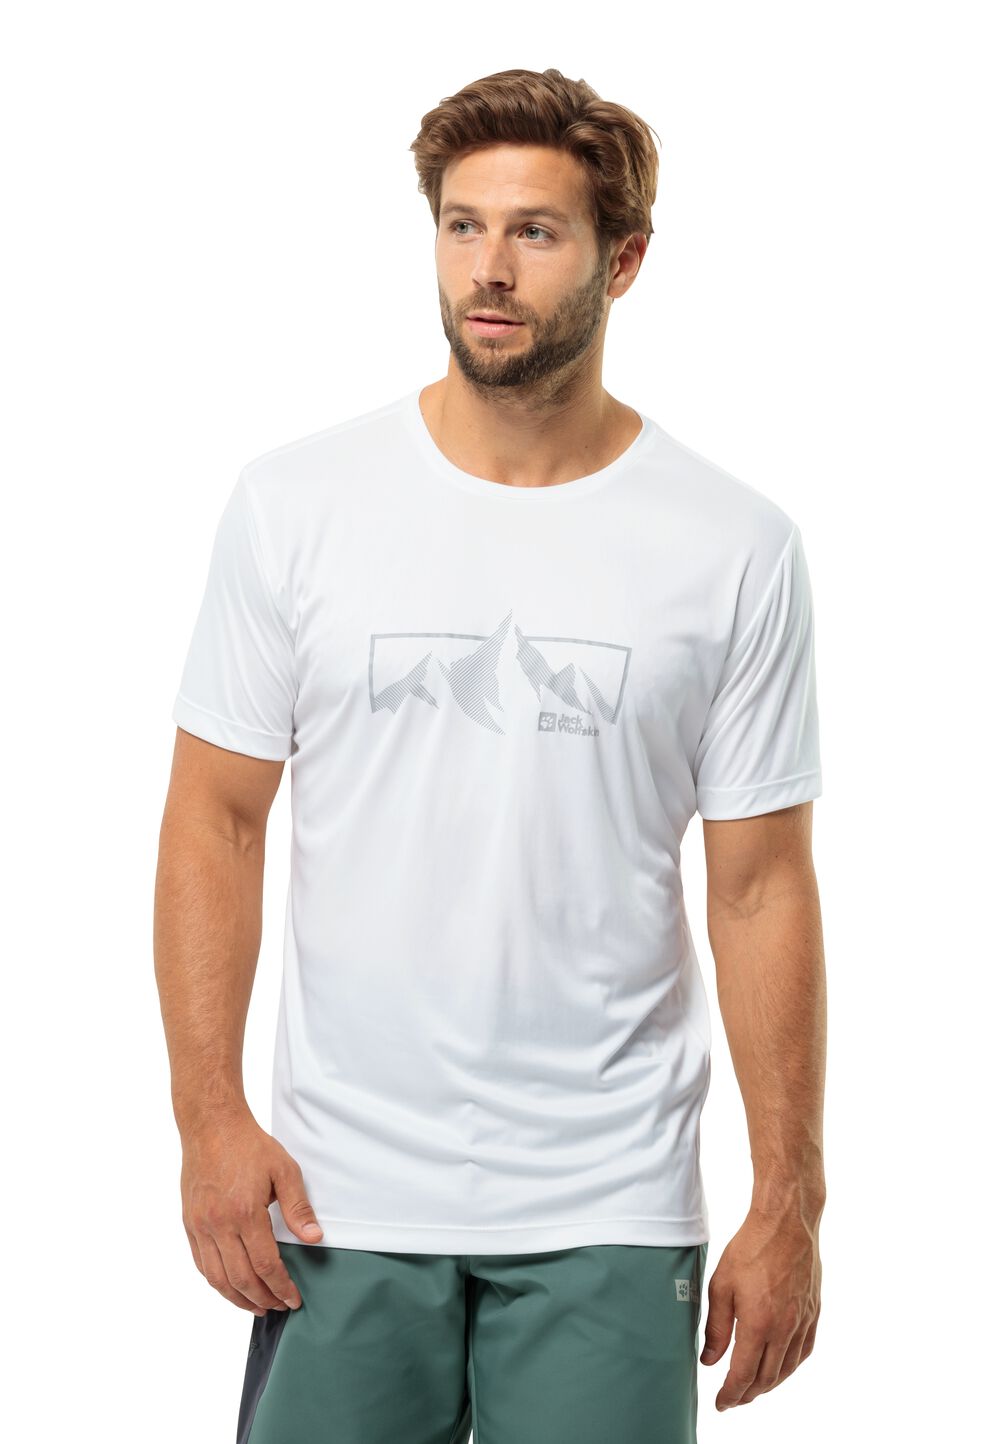 Jack Wolfskin Peak Graphic T-Shirt Men Functioneel shirt Heren M wit stark white